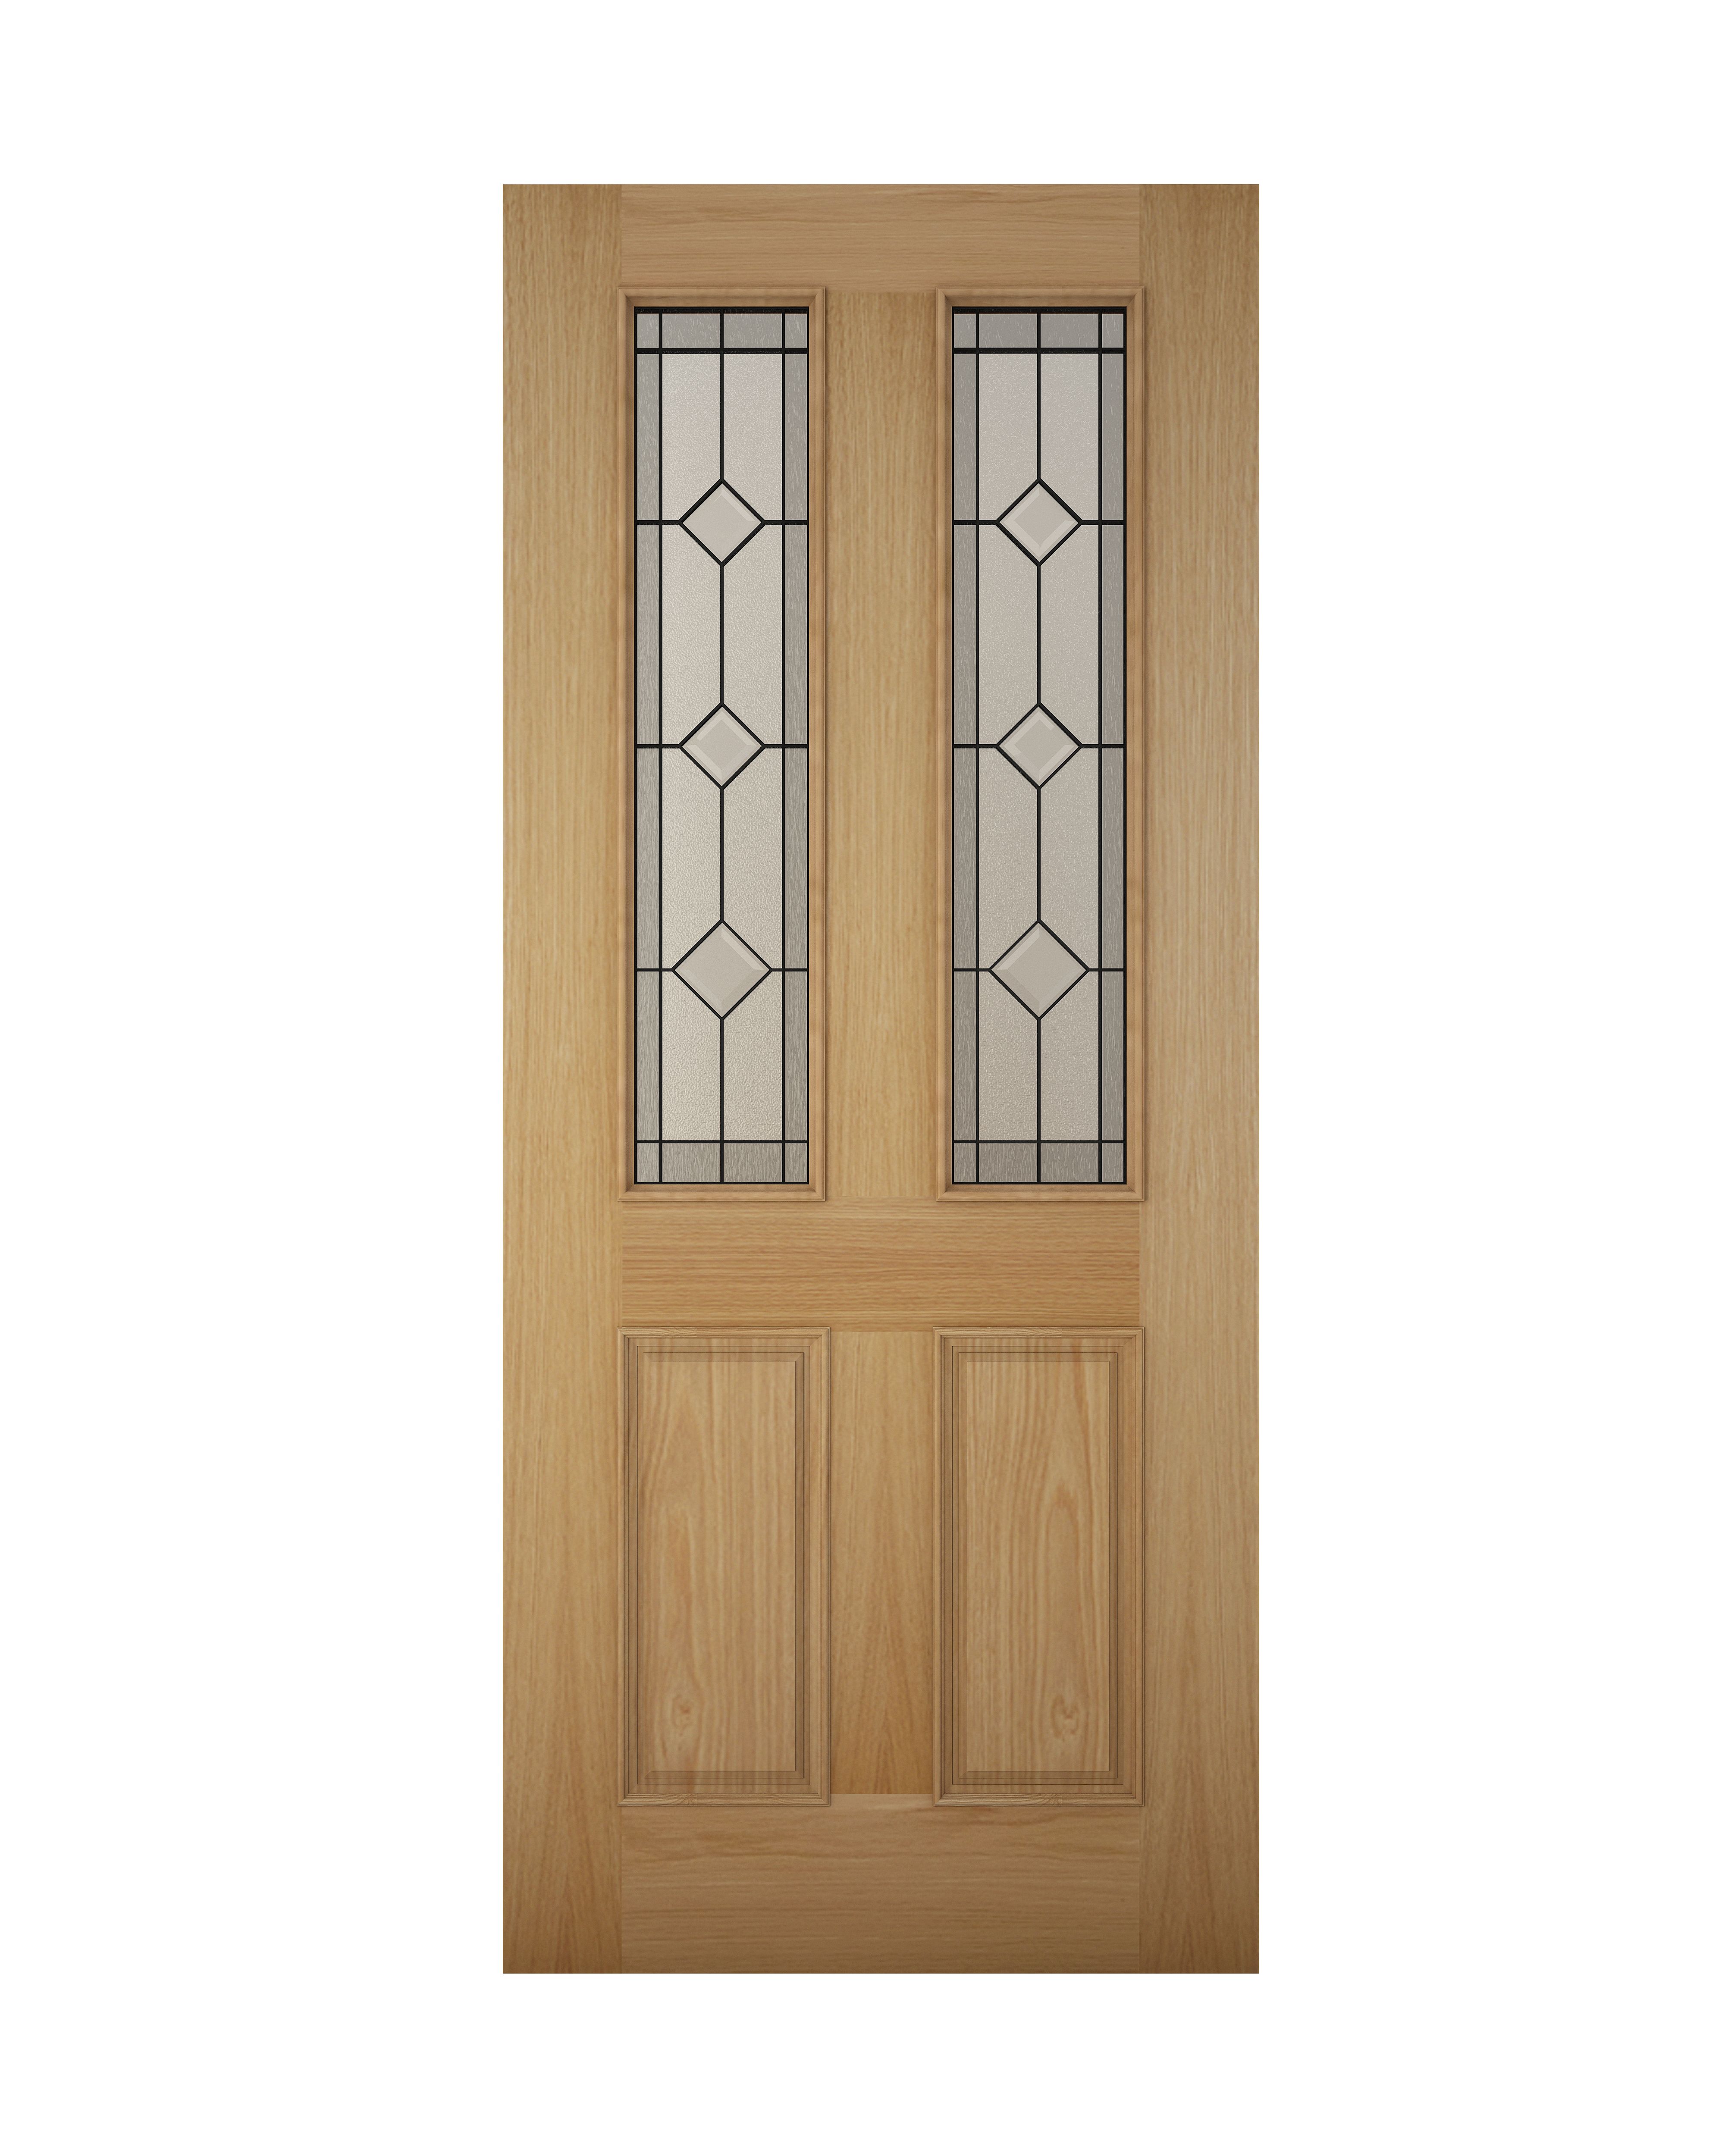 Geom 4 panel Diamond bevel Glazed Wooden White oak veneer External Front door, (H)1981mm (W)762mm